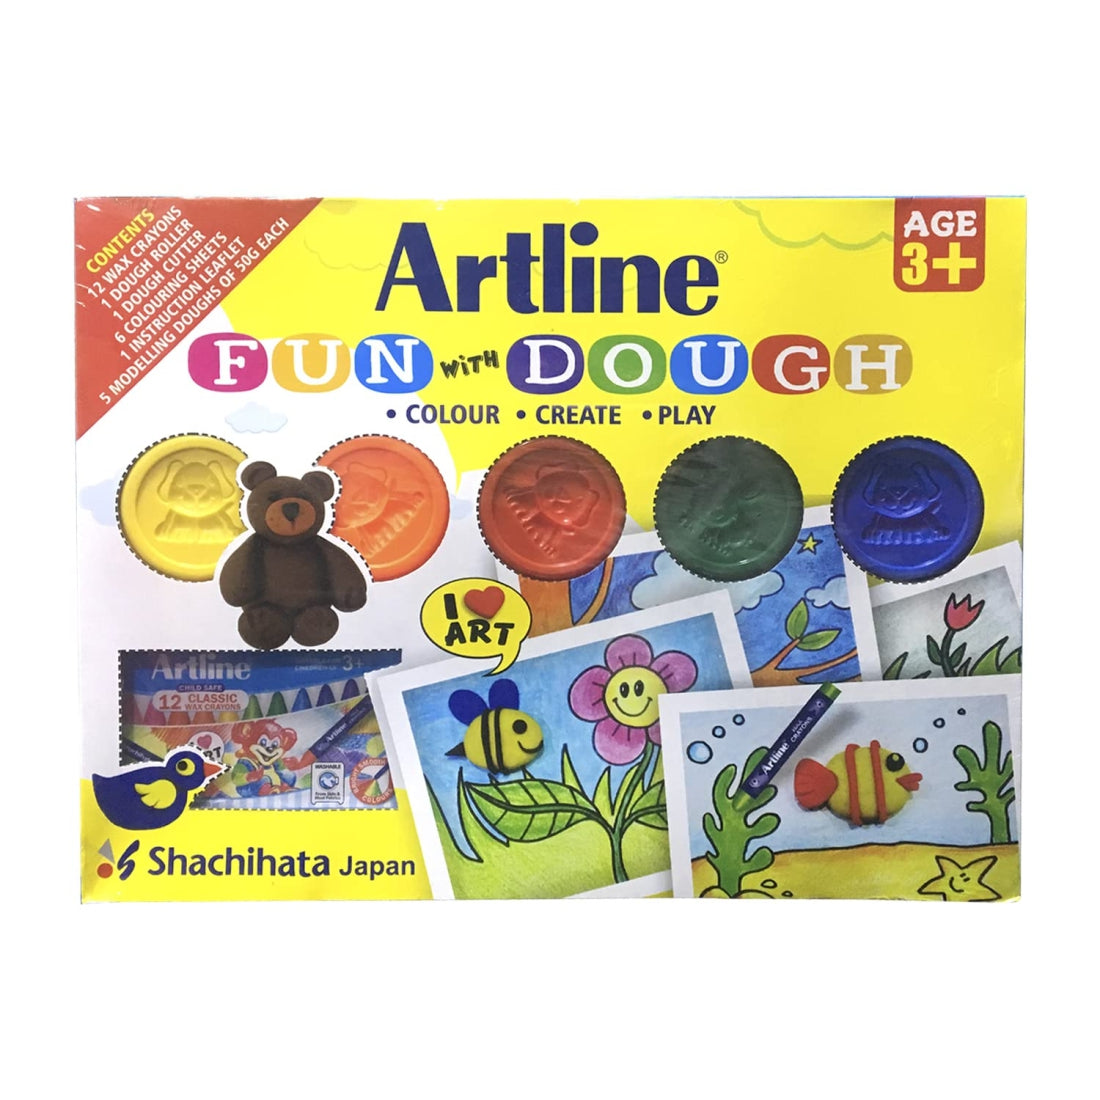 Artline Fun with Dough